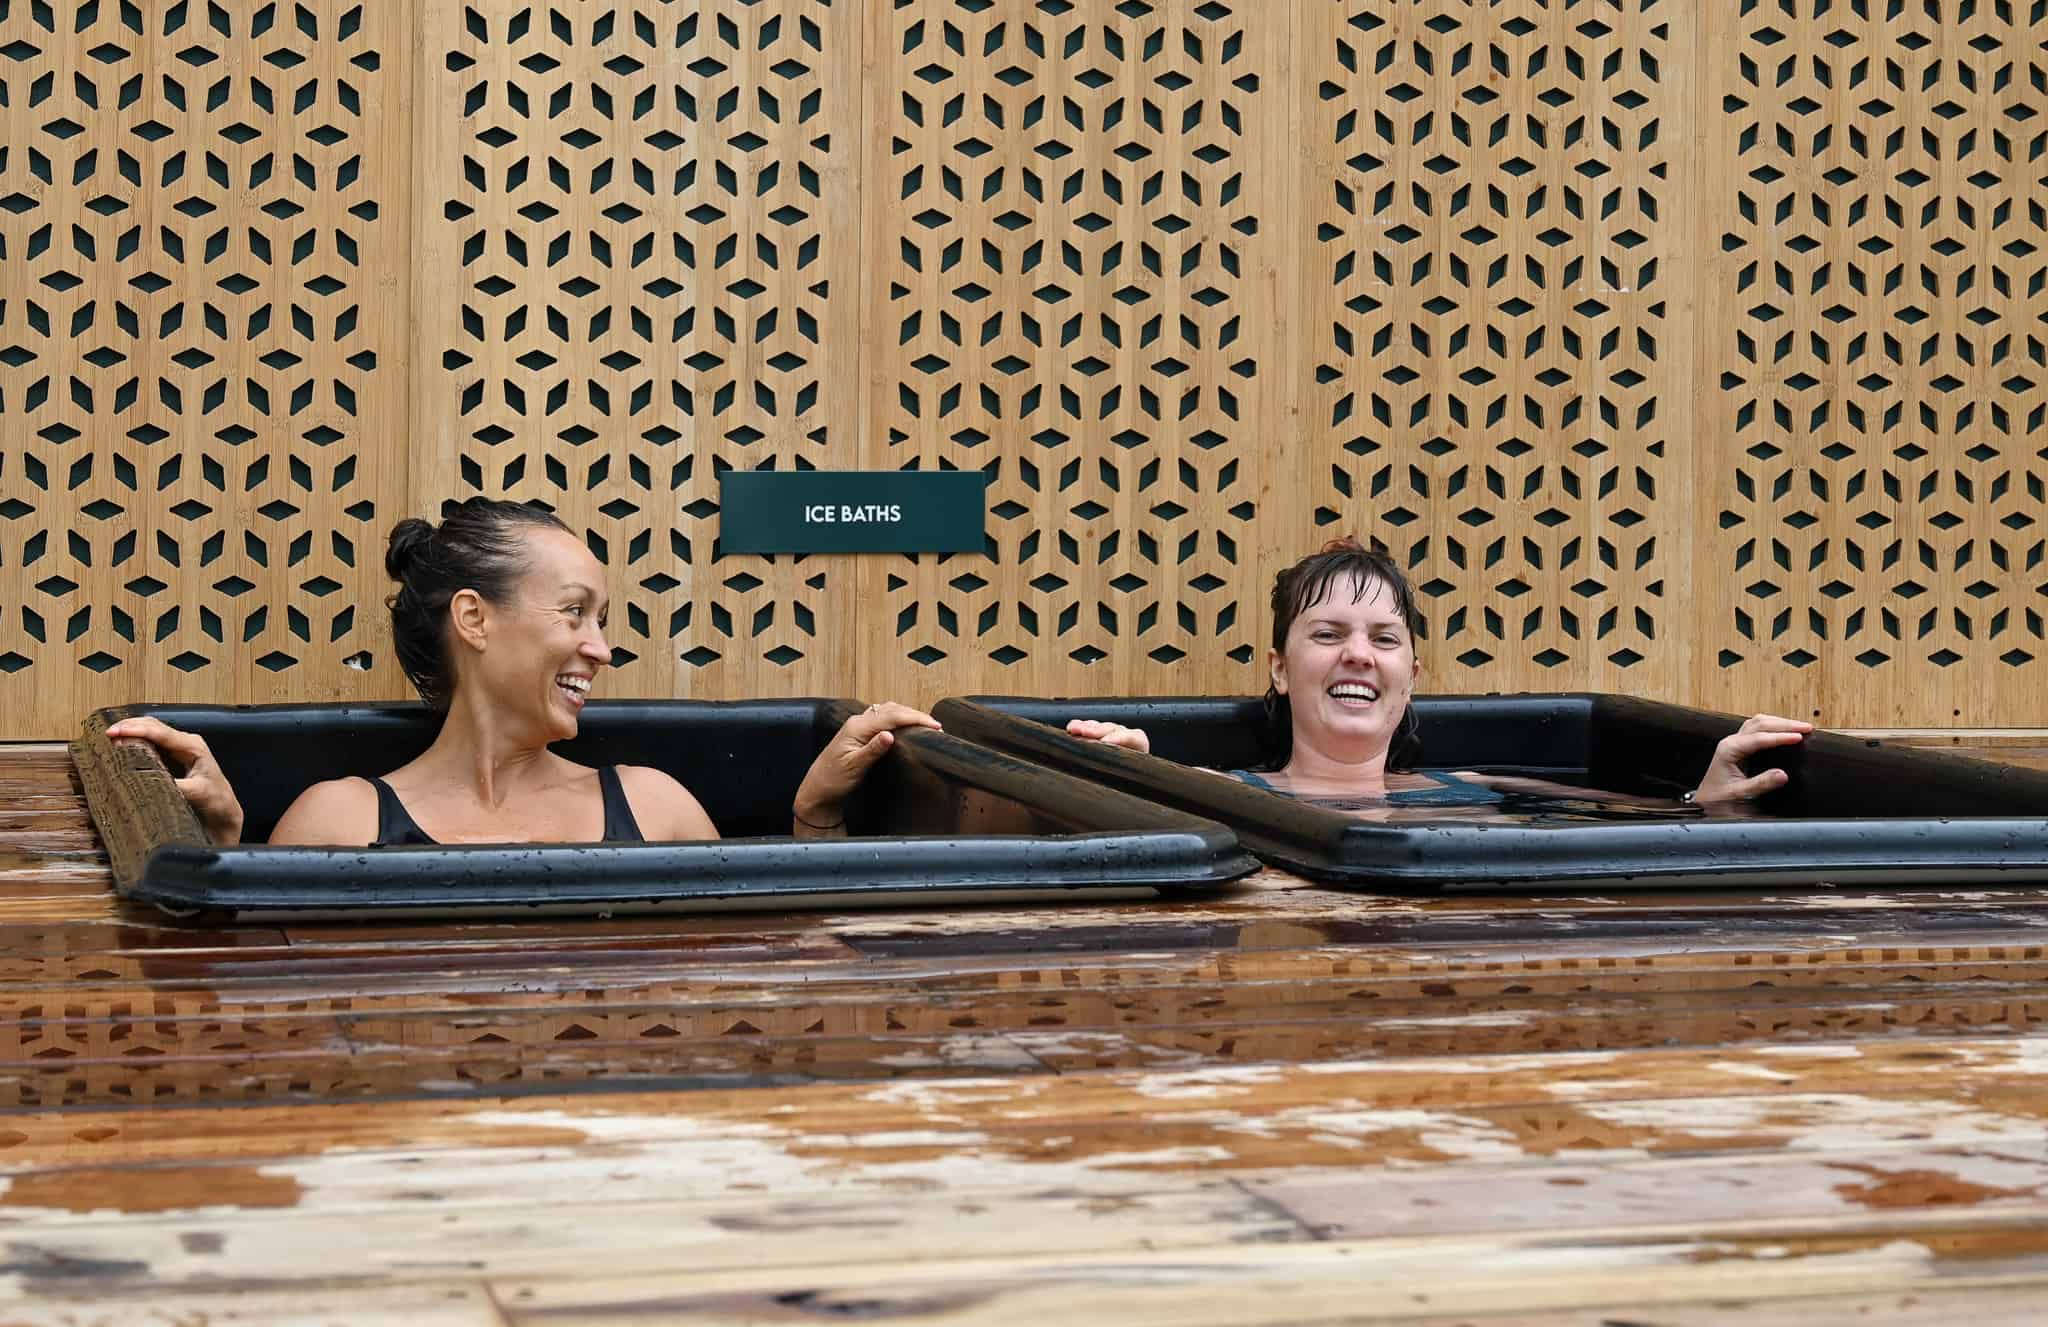 Friends enjoying an ice bath at Vikasati bathhouse in Brisbane